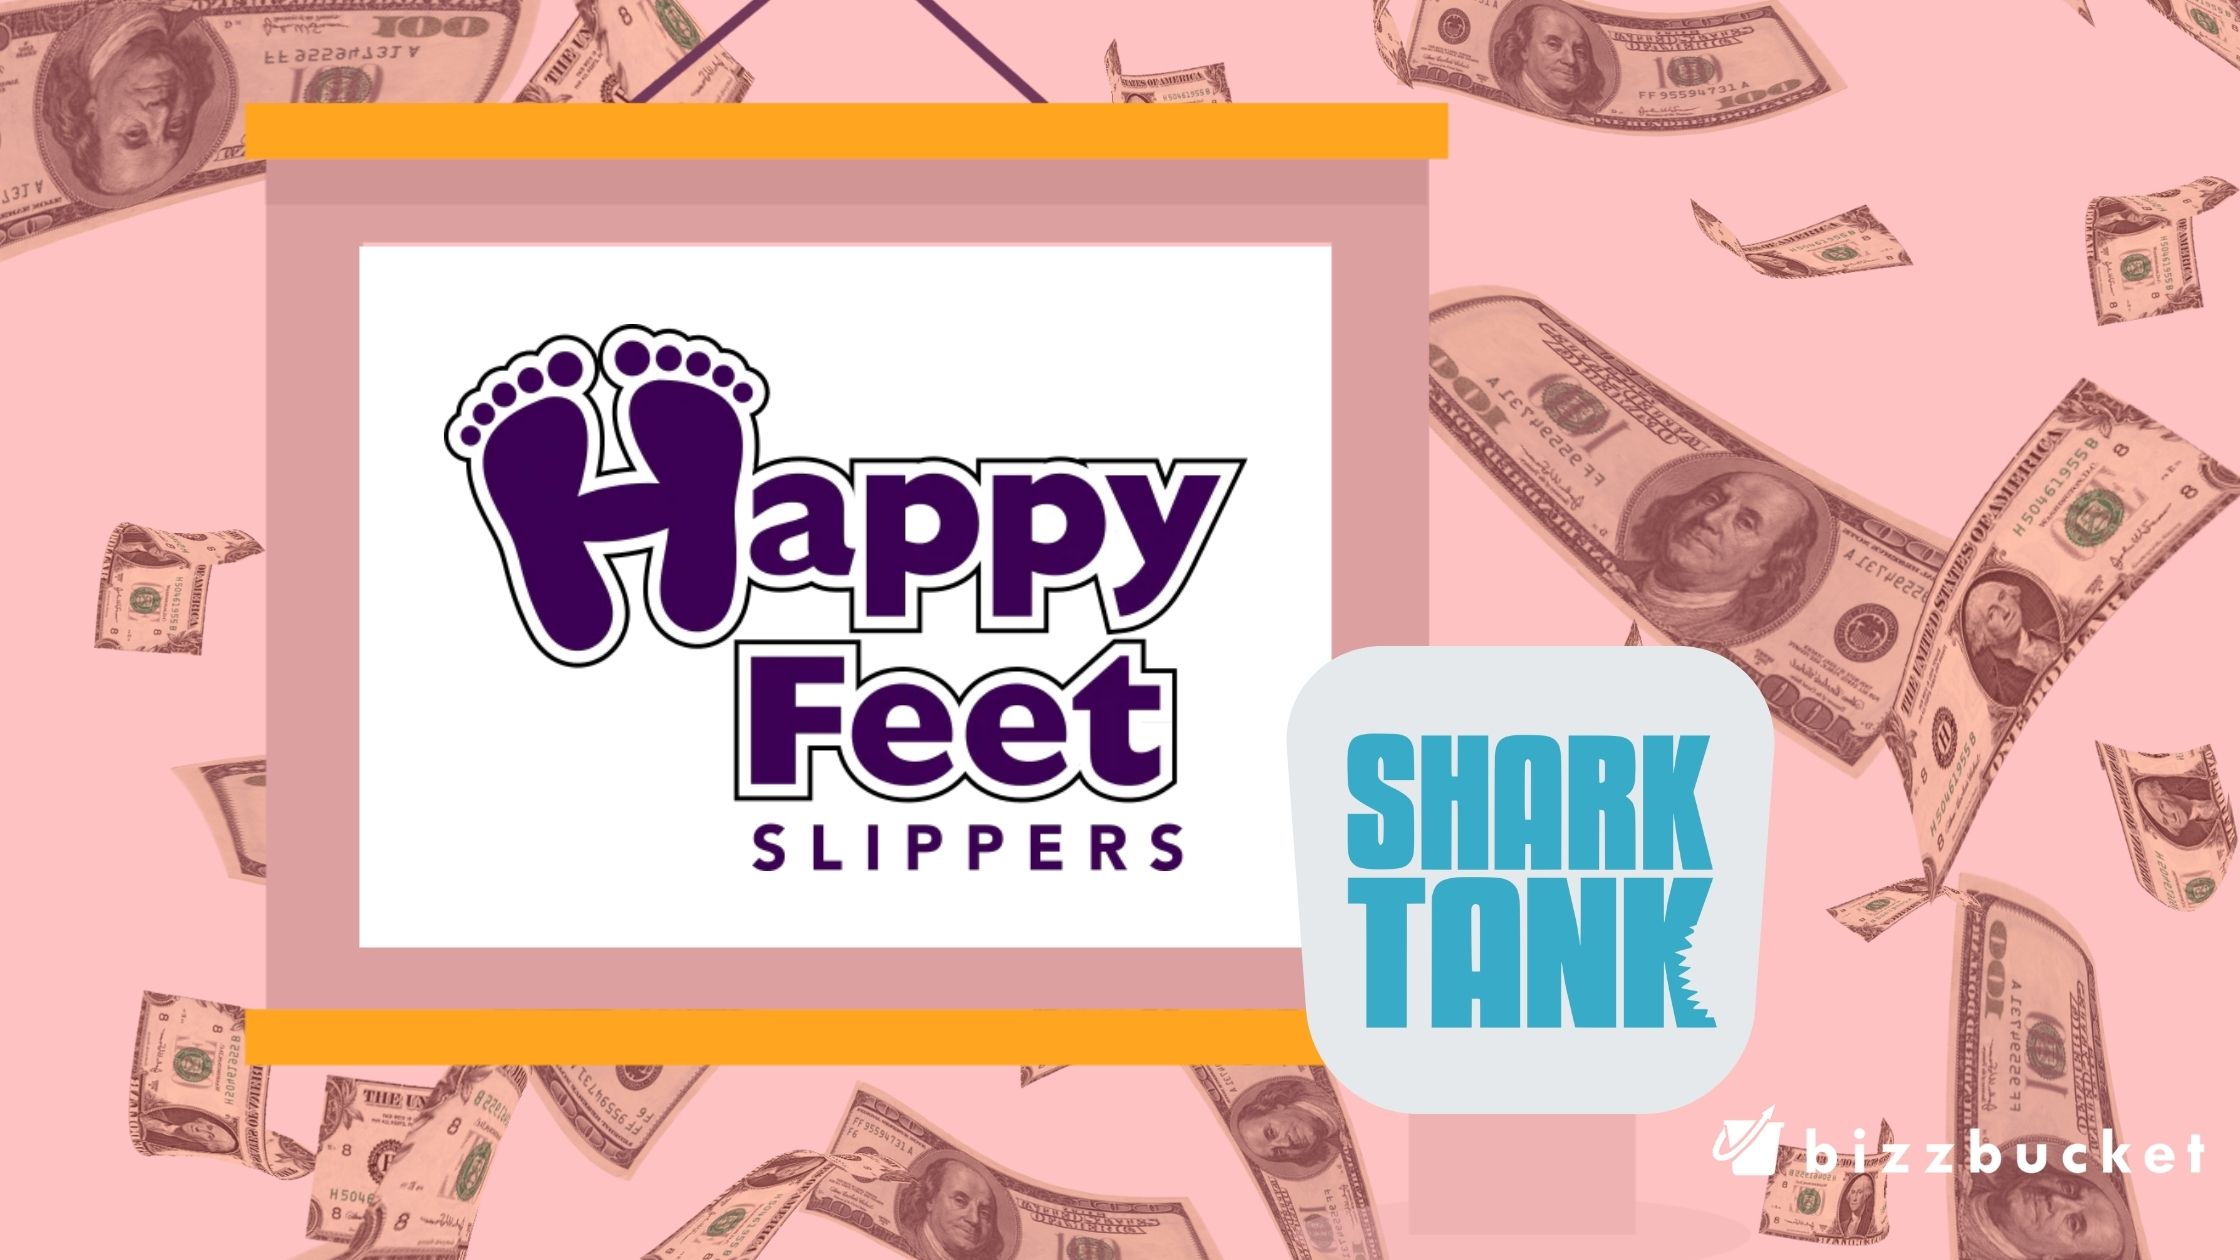 Happy Feet shark tank update